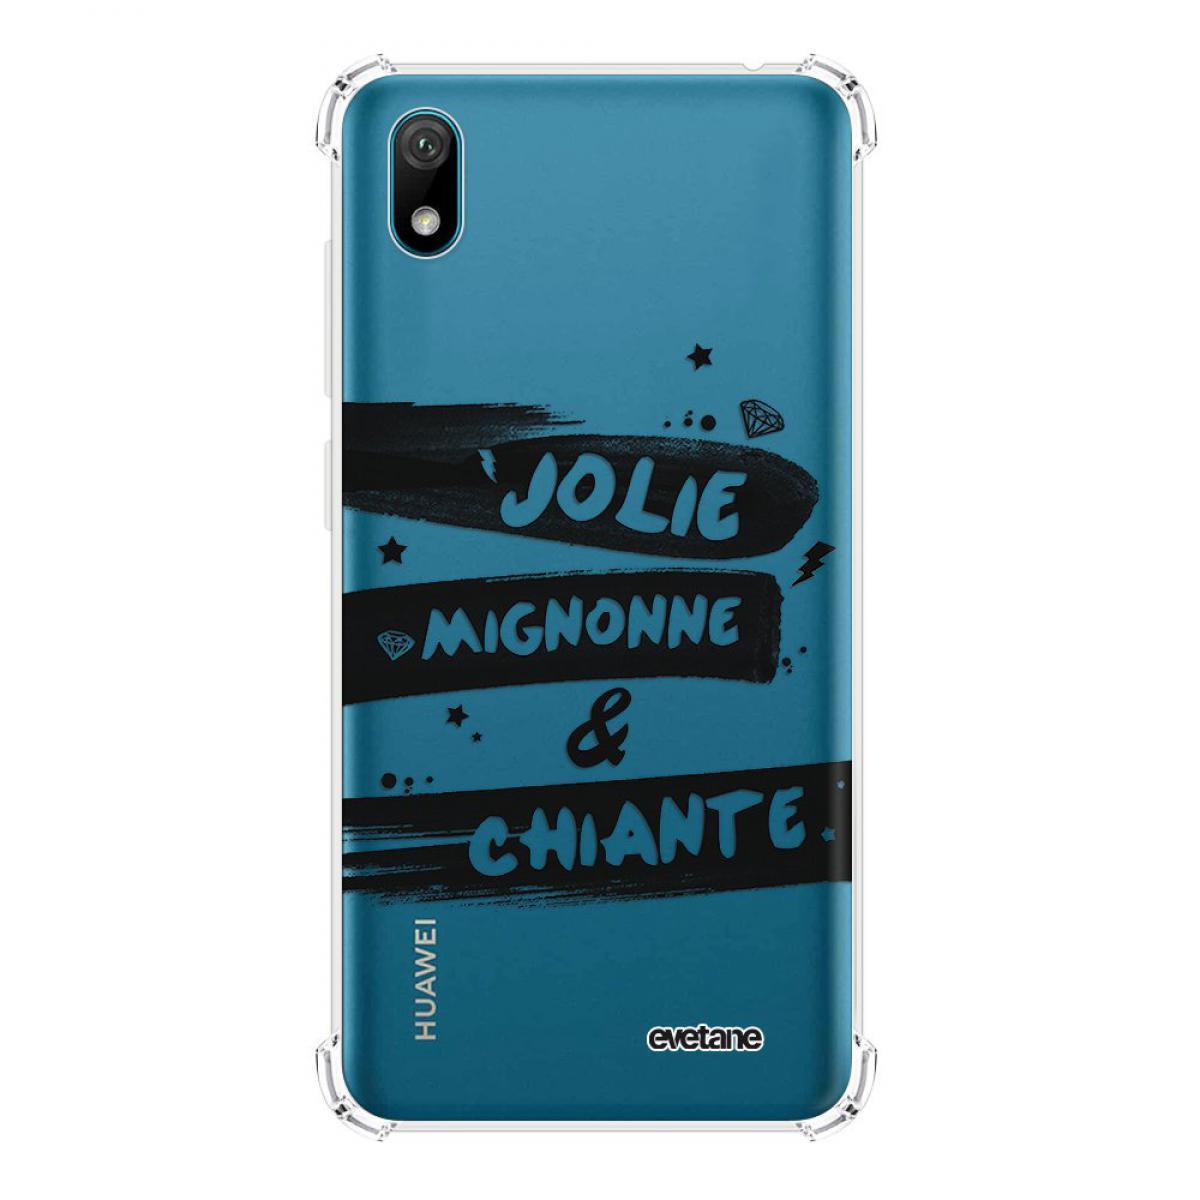 Evetane - Coque Huawei Y5 2019 anti-choc souple angles renforcés transparente Jolie Mignonne et chiante Evetane - Coque, étui smartphone